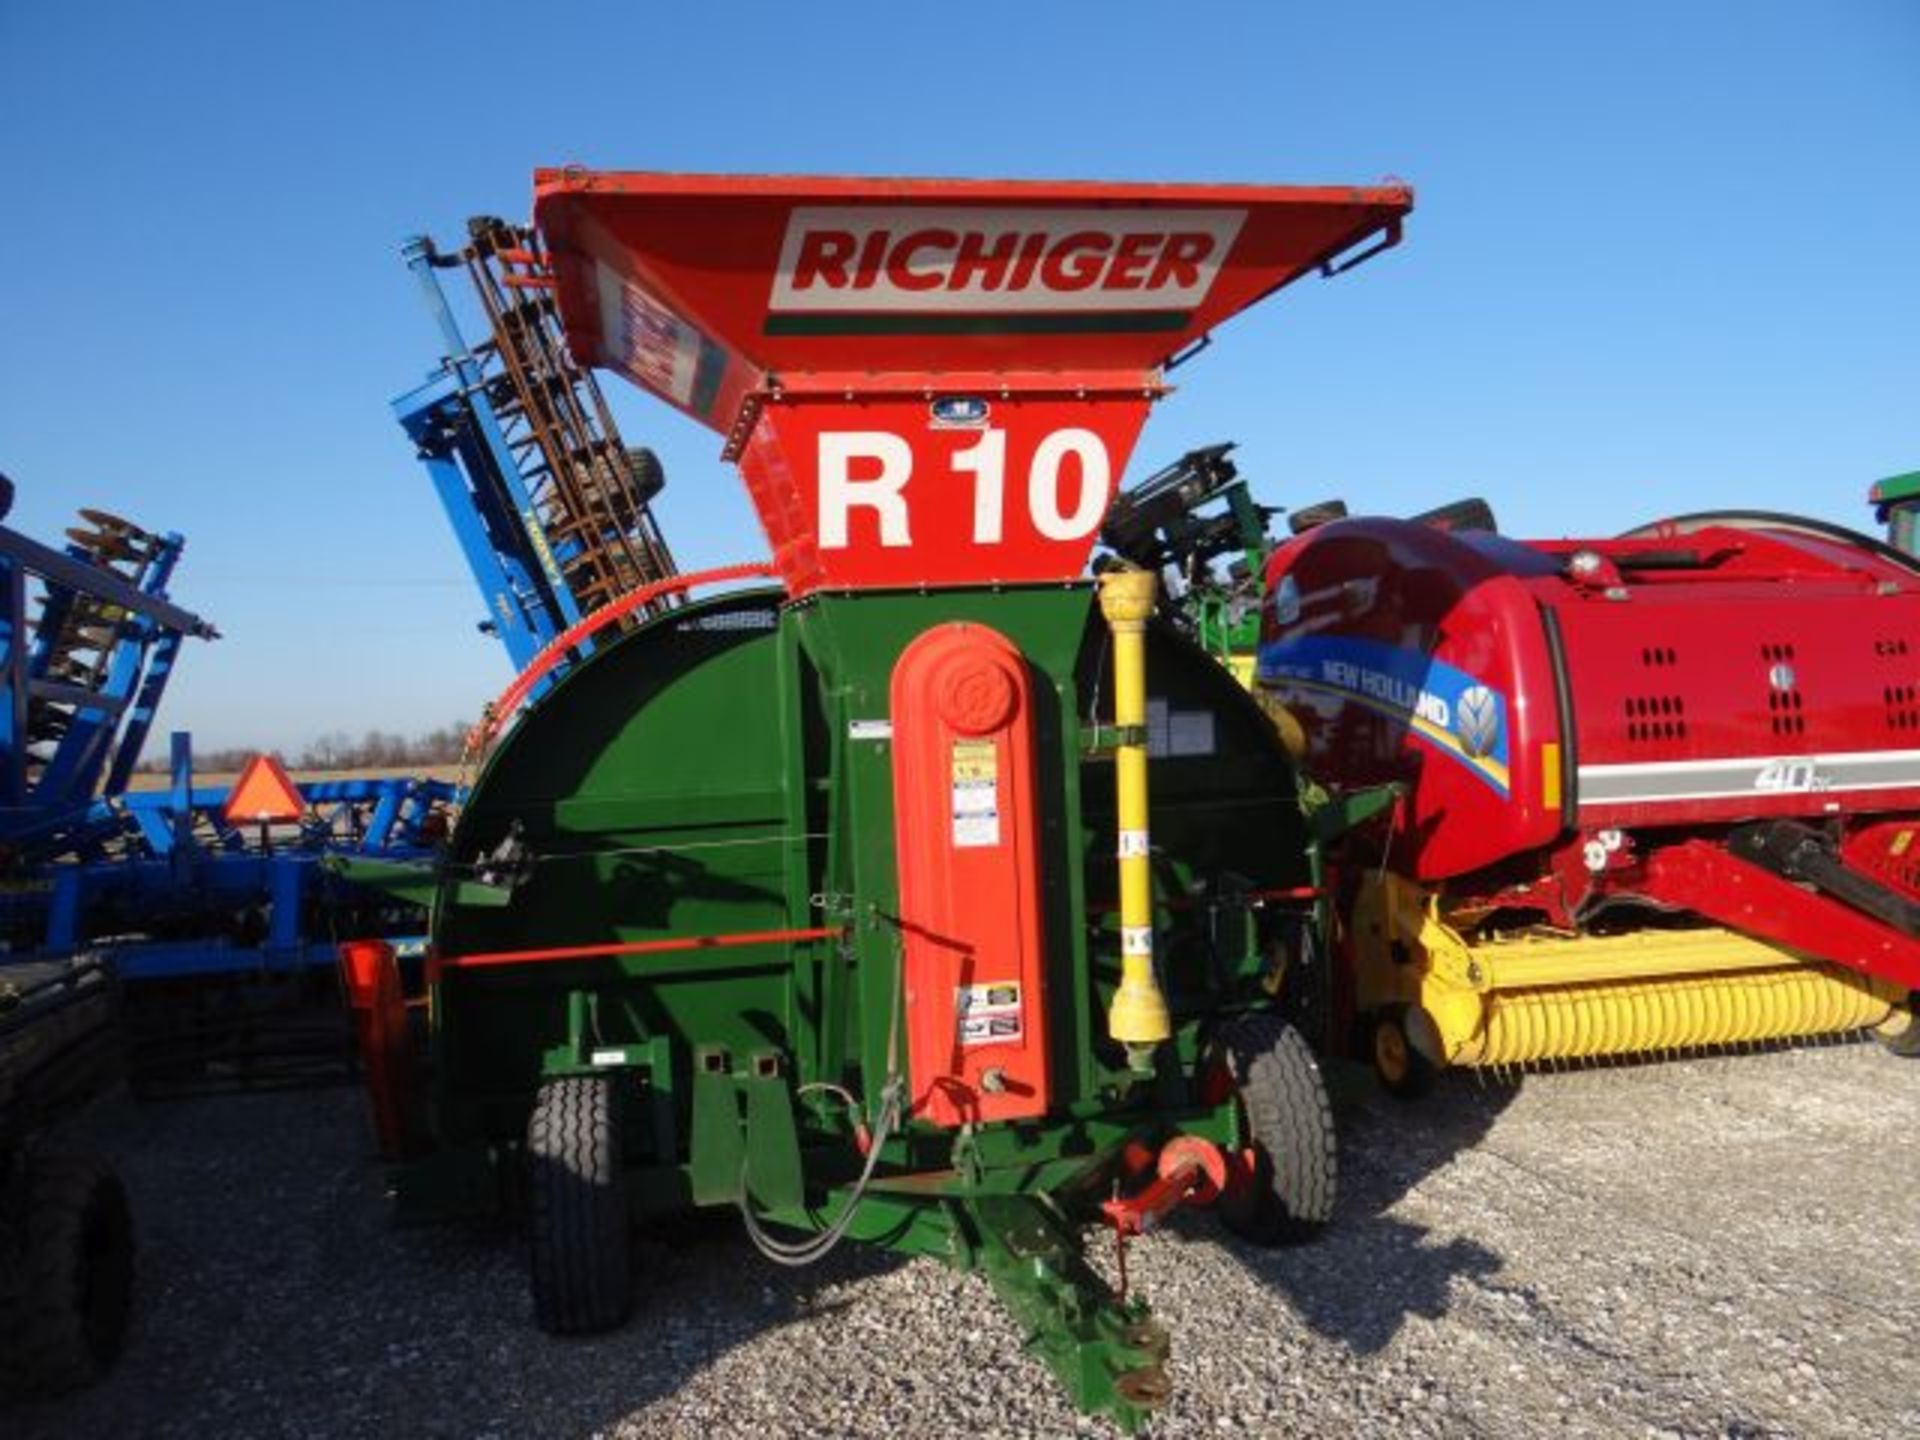 Richiger R105 Grain Bagger, 2014 #112494 - Bild 2 aus 3